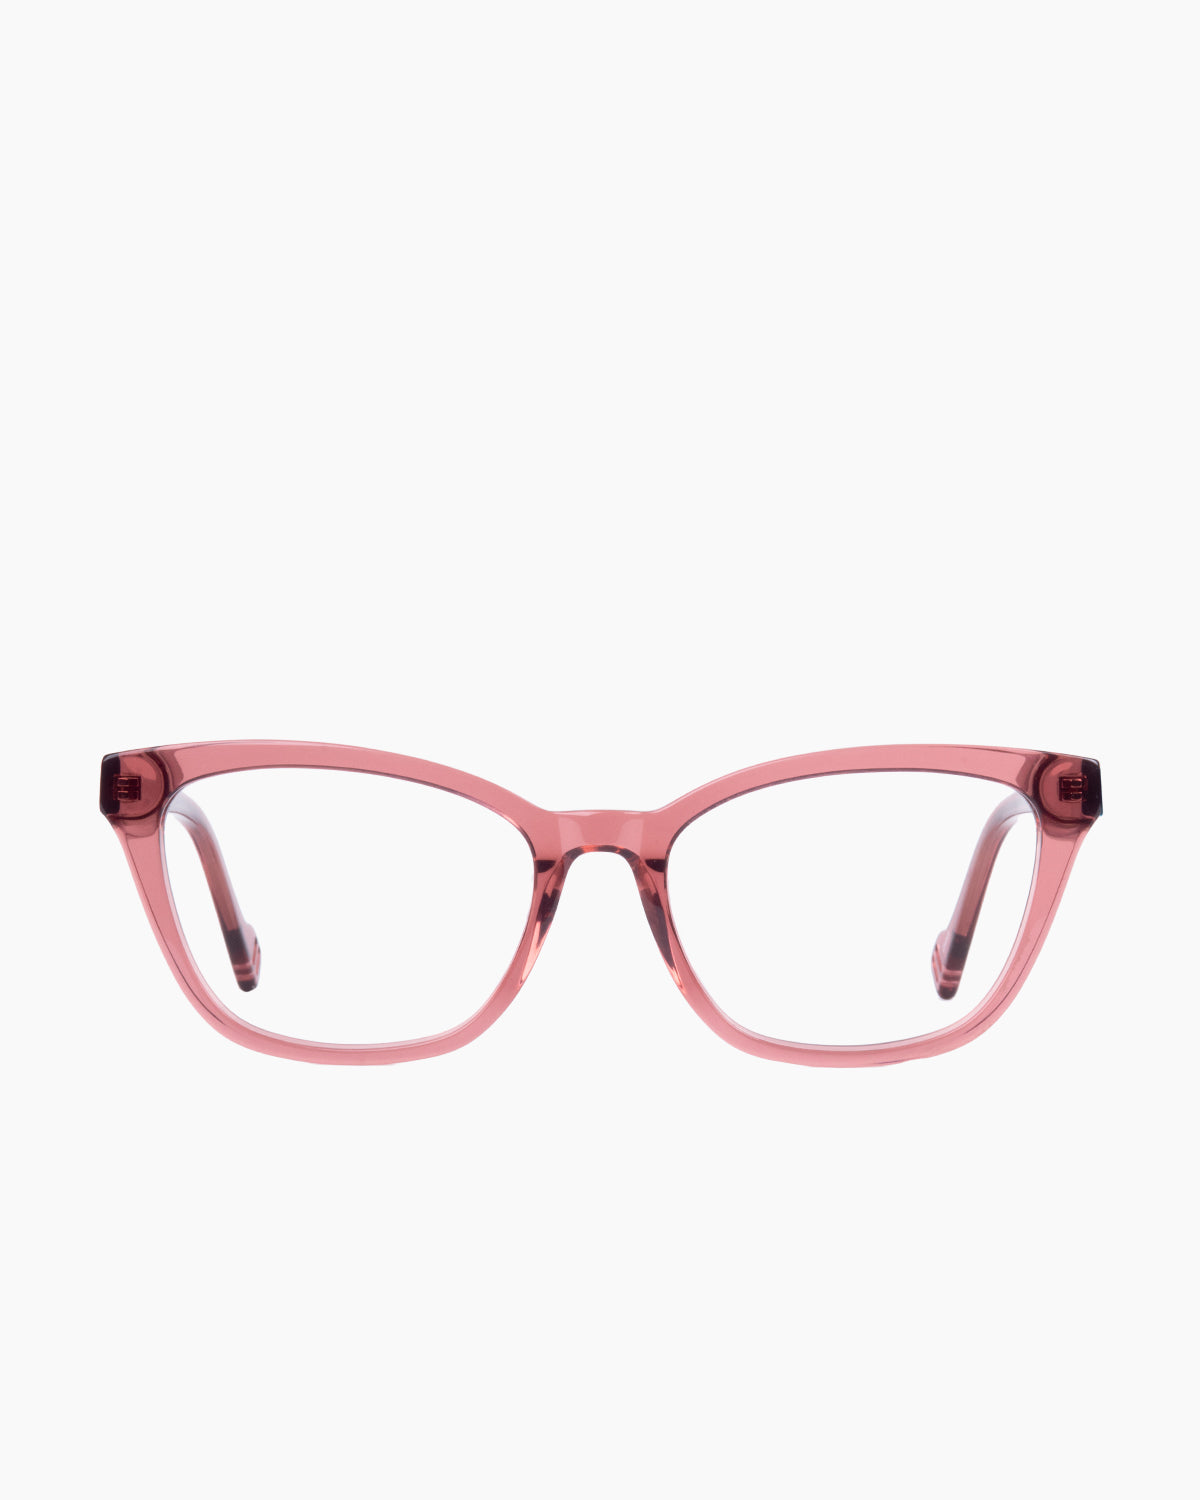 Evolve - Sally - 14 | Bar à lunettes:  Marie-Sophie Dion